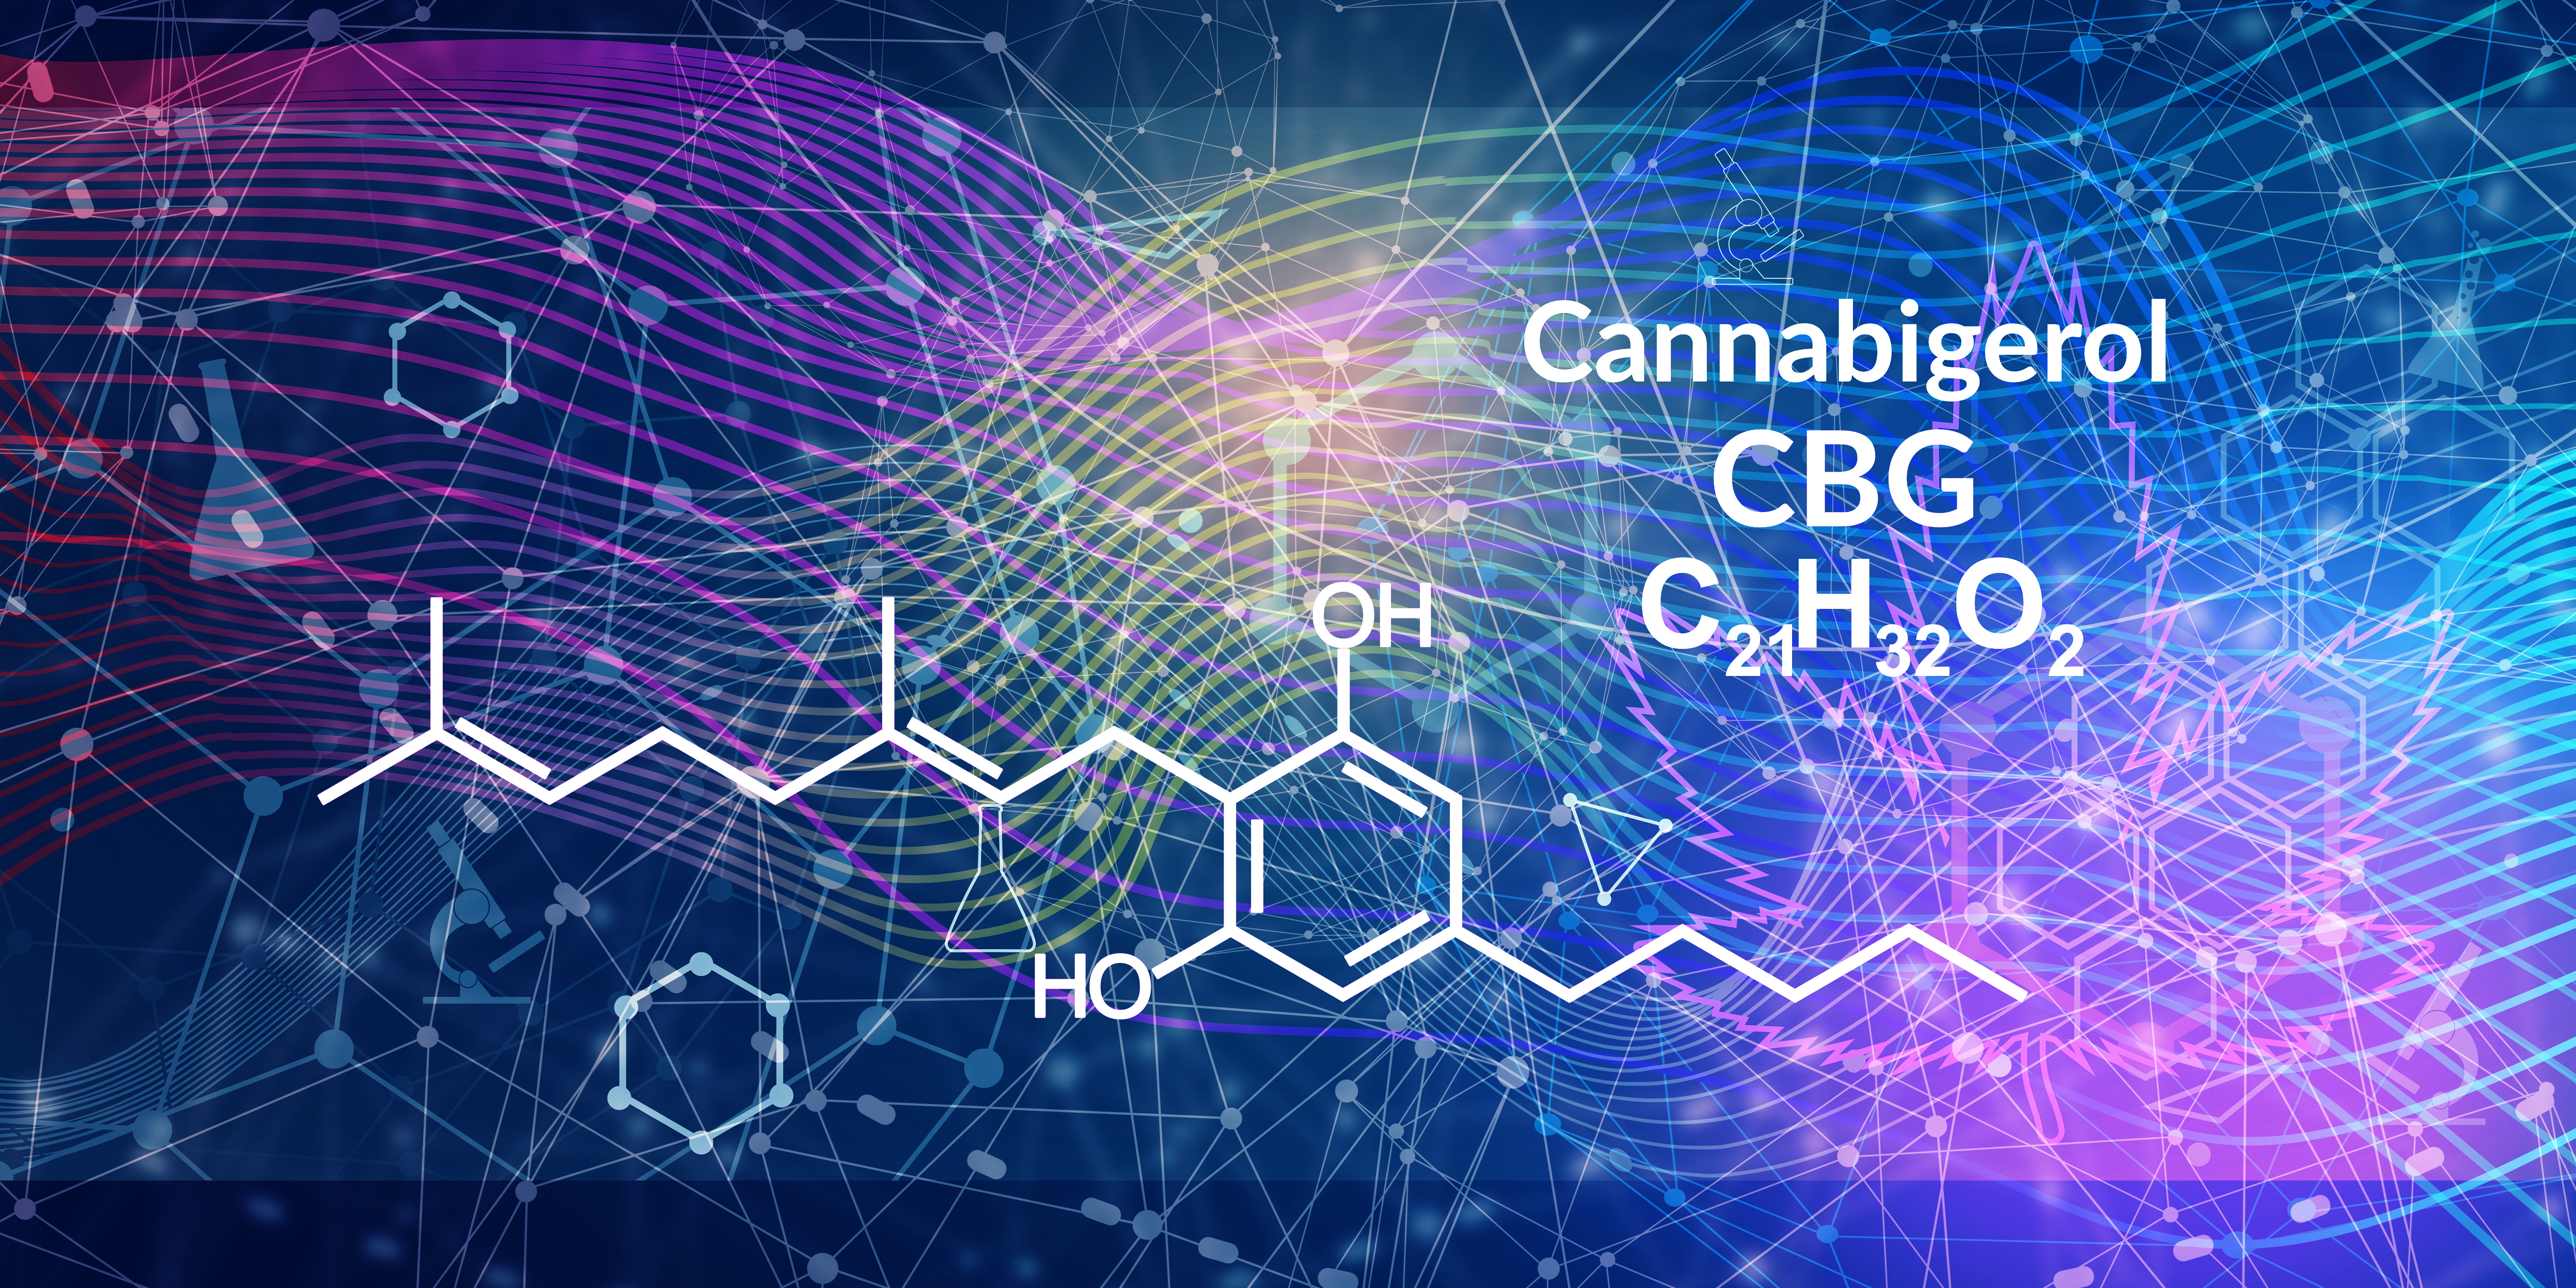 Cannabigerol or CBG molecular structural chemical formula against colorful science backdrop.